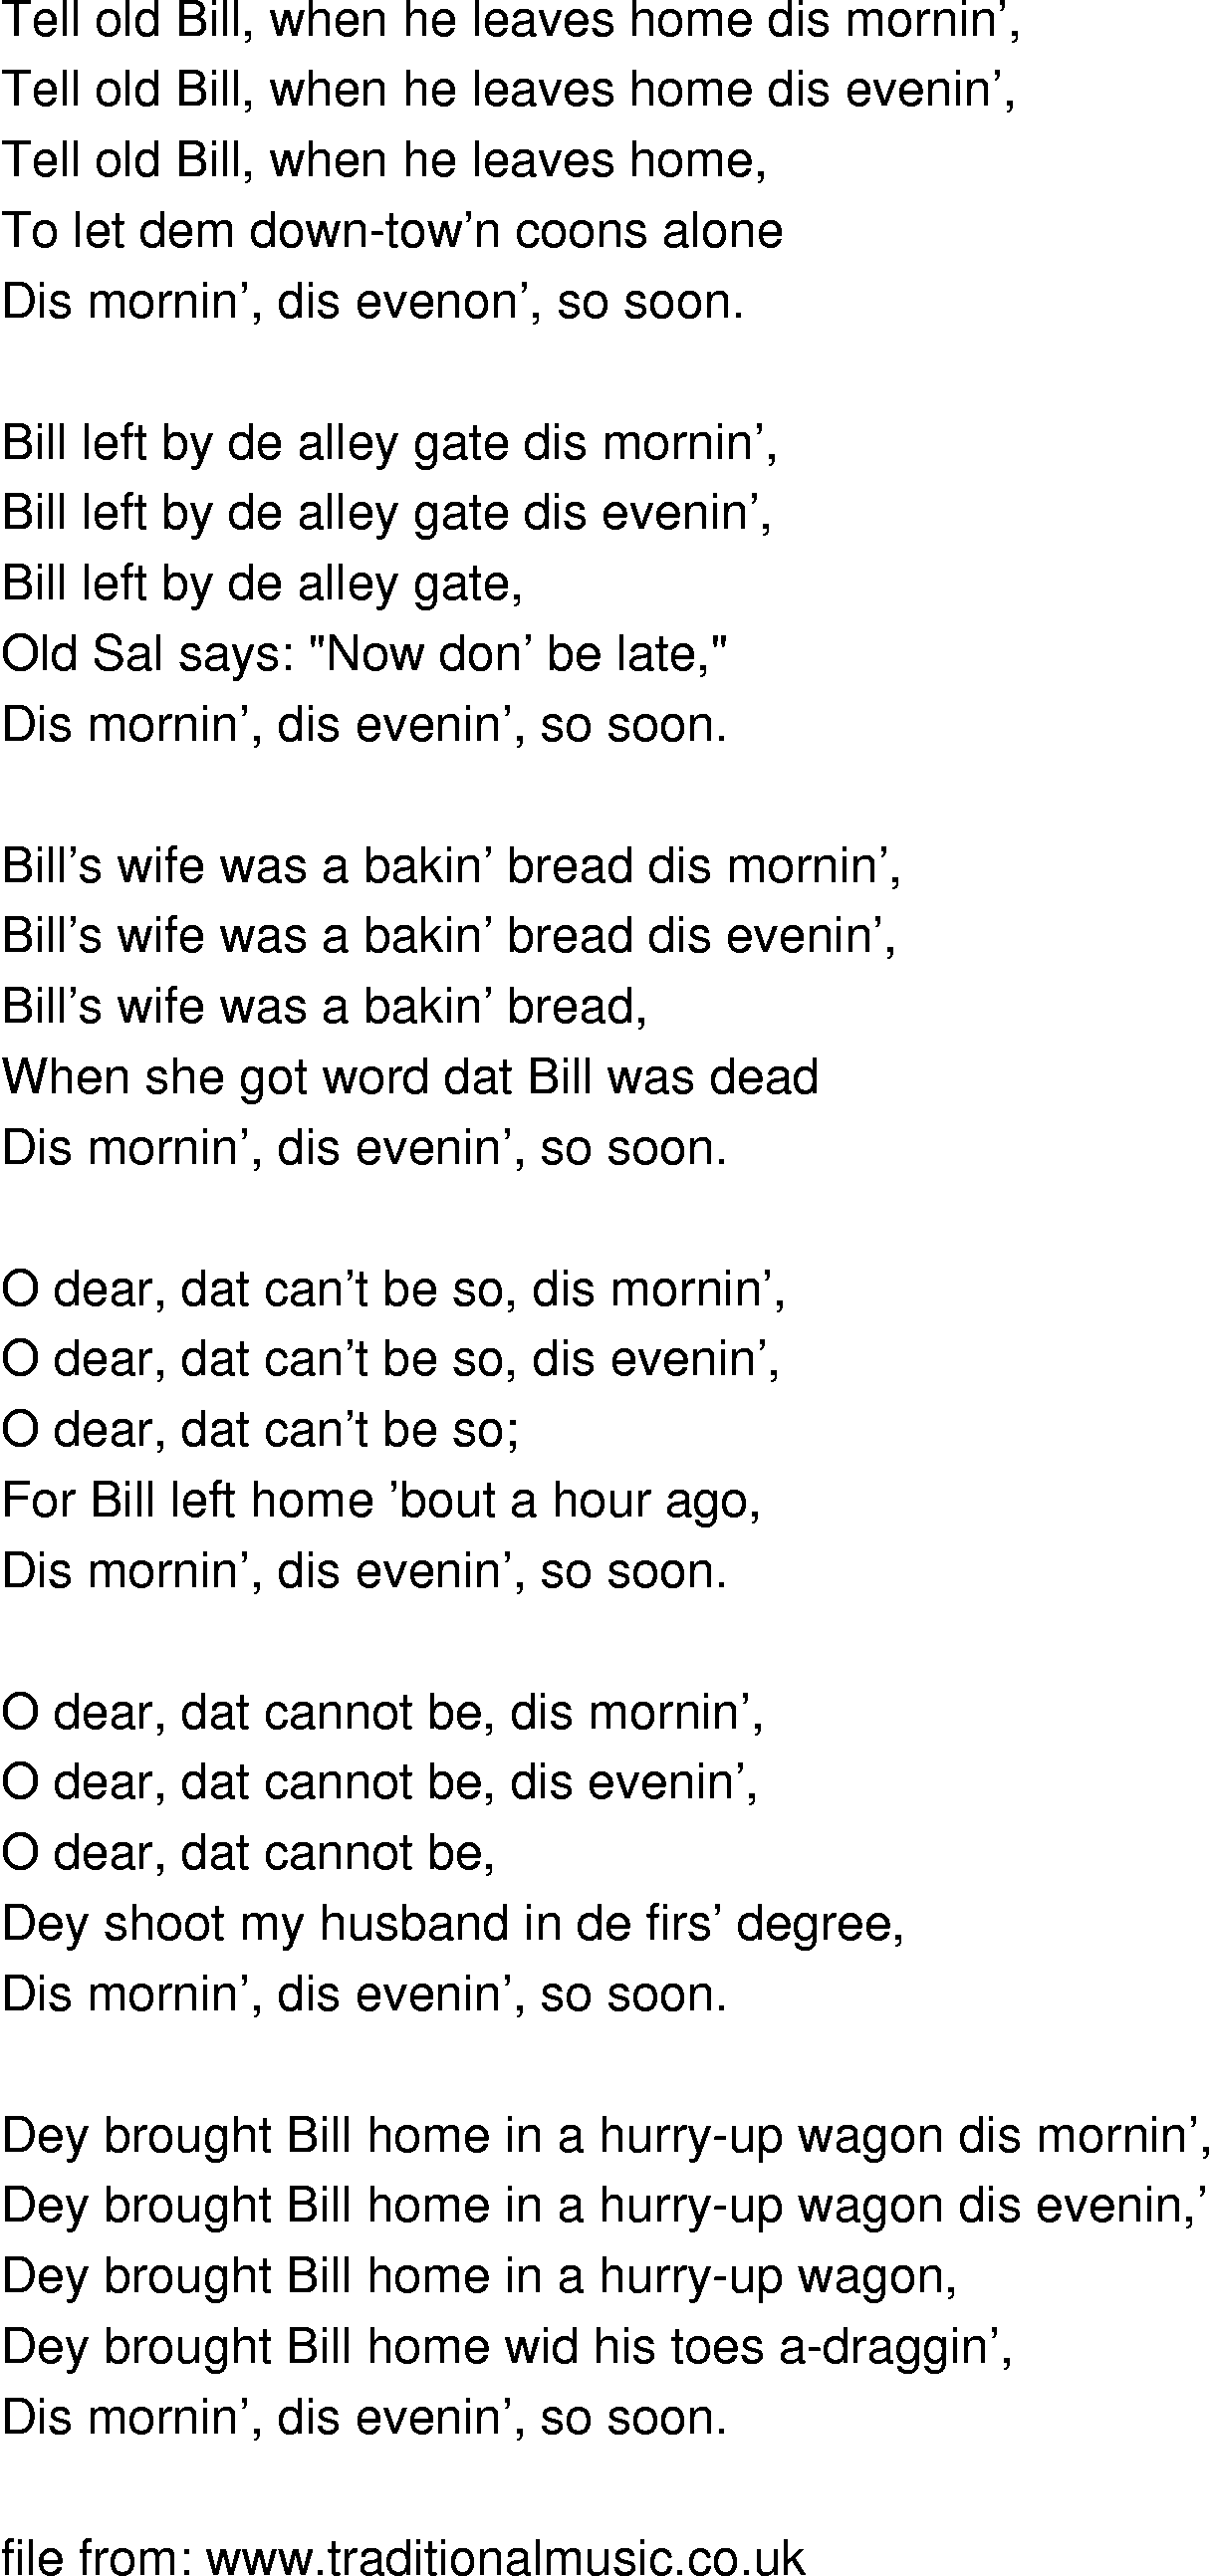 Old-Time (oldtimey) Song Lyrics - tell old bill